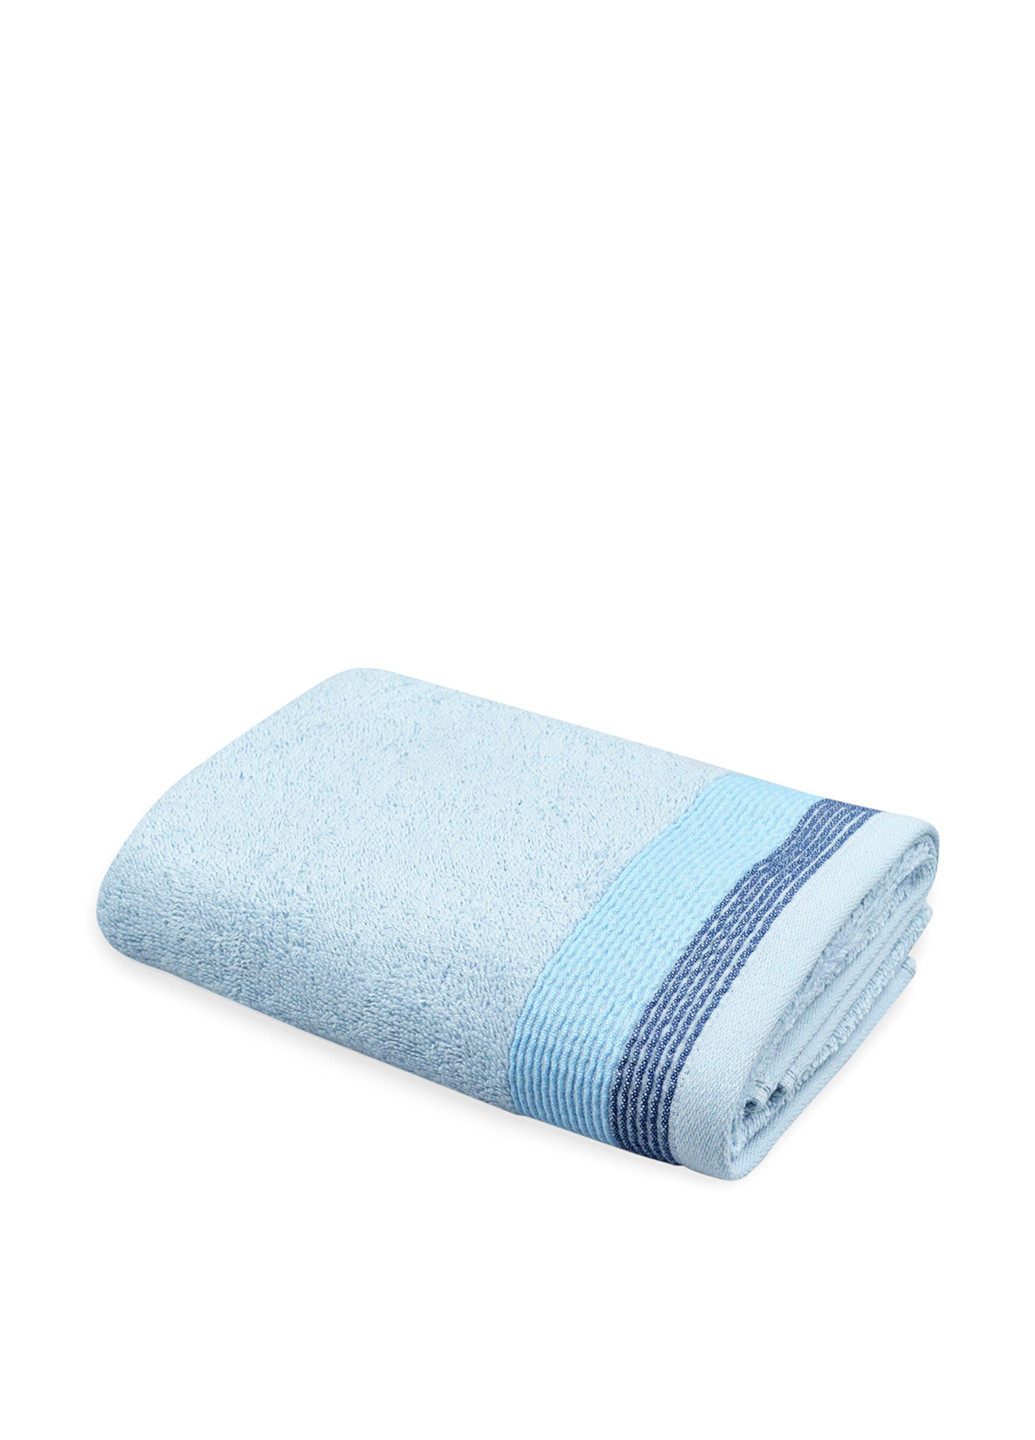 Home Line полотенце, 68х128 см однотонный голубой производство - Индия